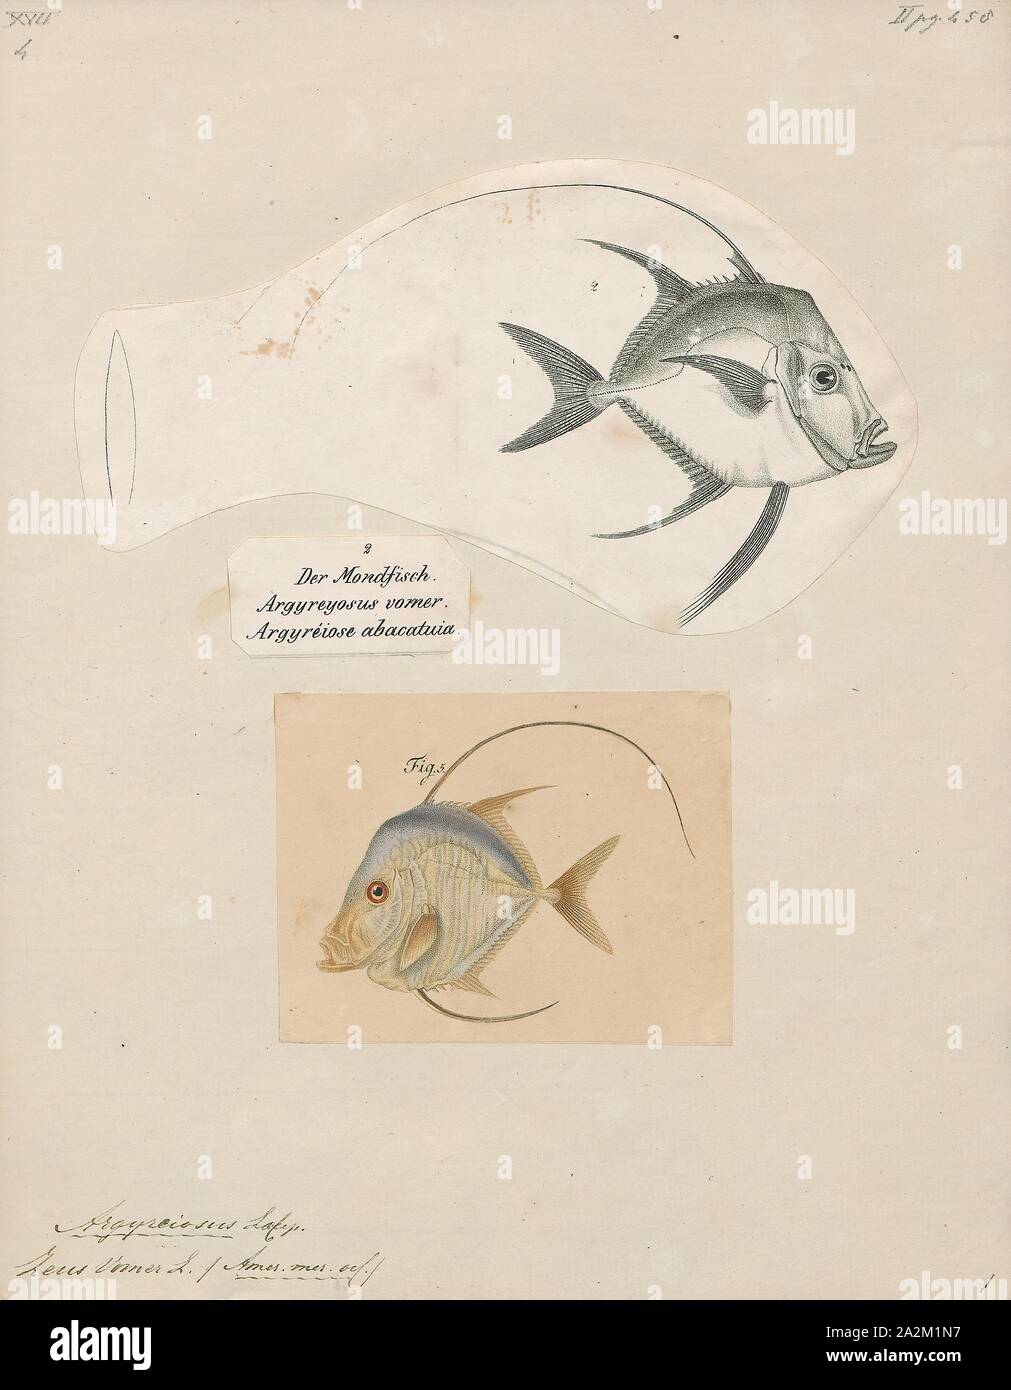 Argyreiosus vomer, Drucken, 1700-1880 Stockfoto